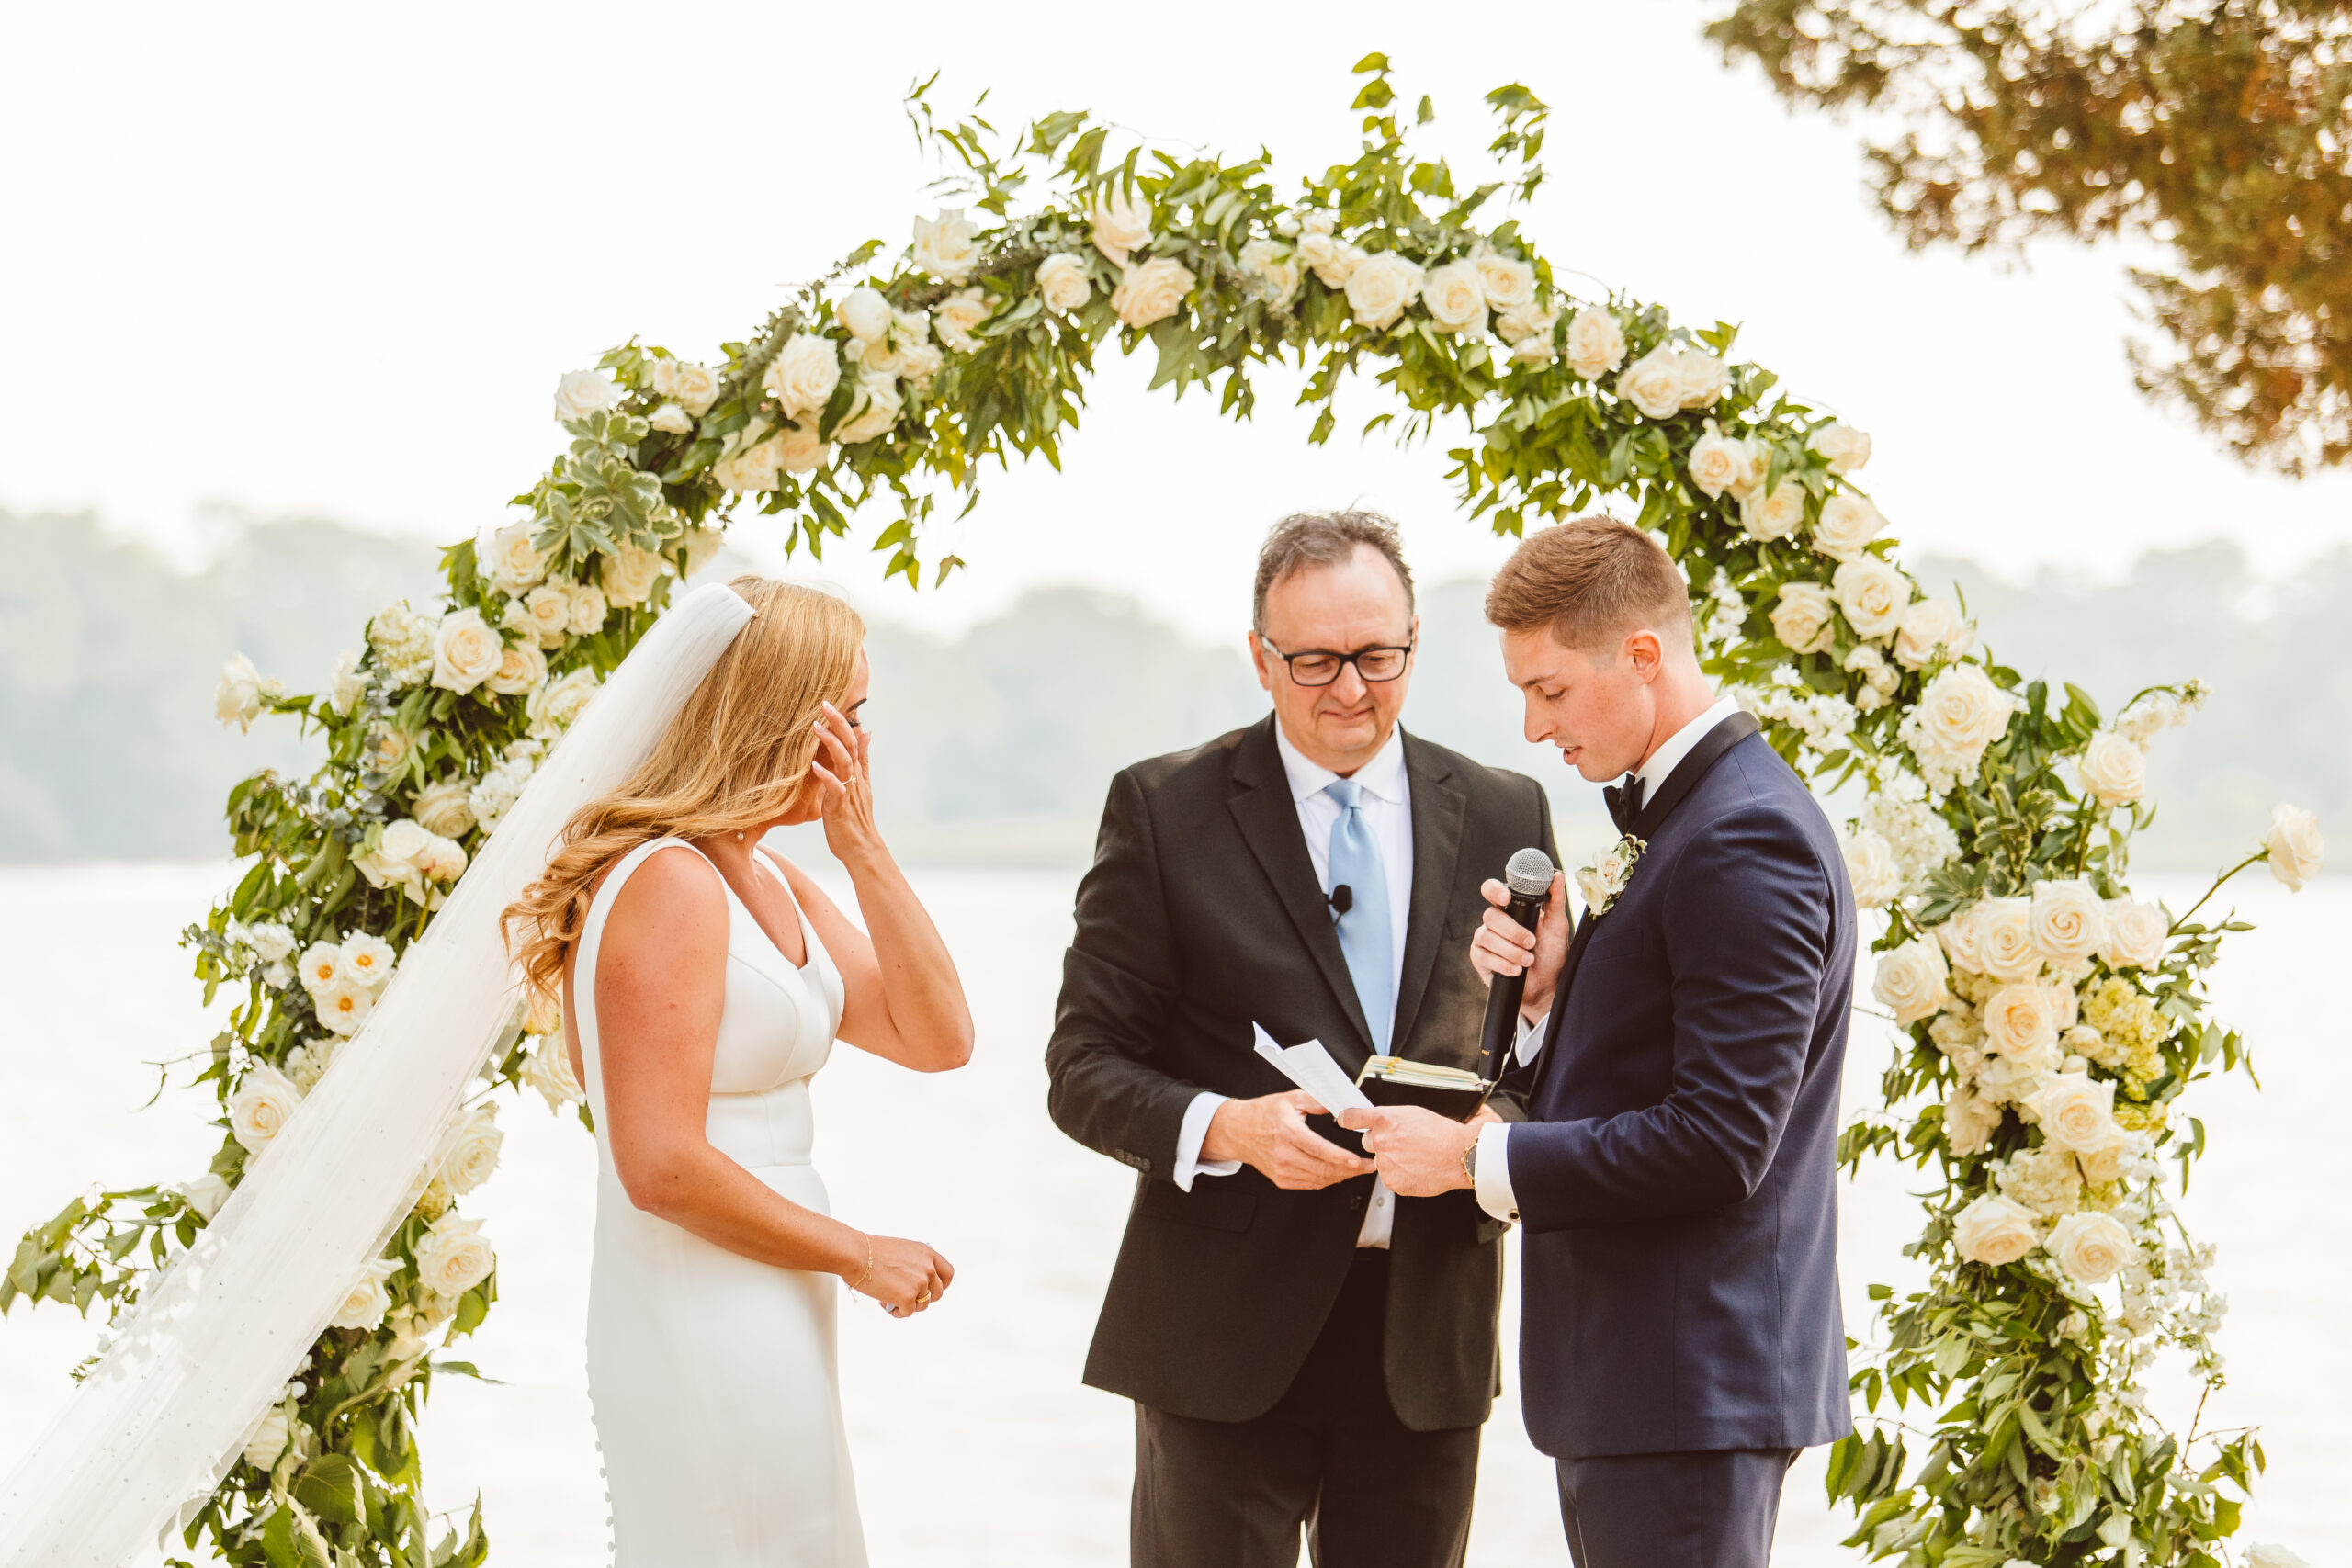 An outdoor ceremony at Brittland Manor MD wedding venue